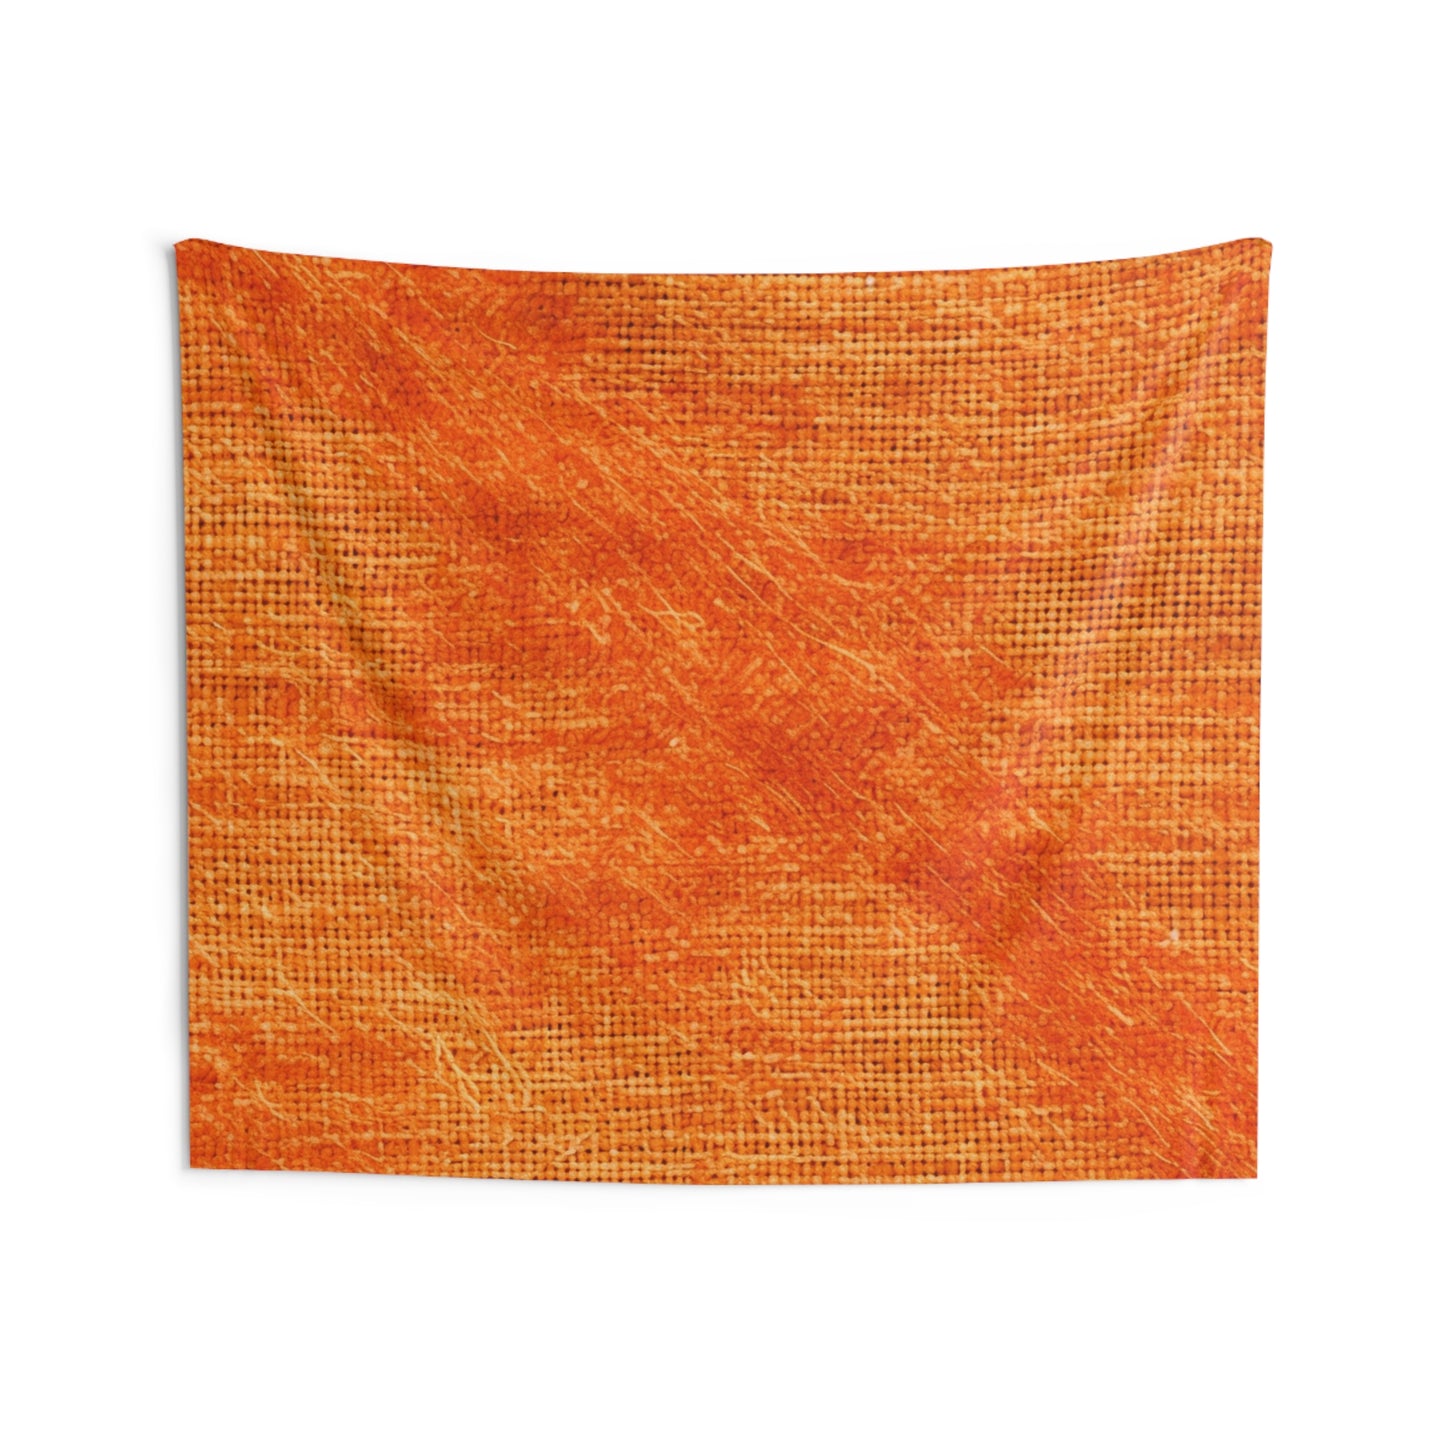 Burnt Orange/Rust: Denim-Inspired Autumn Fall Color Fabric - Indoor Wall Tapestries